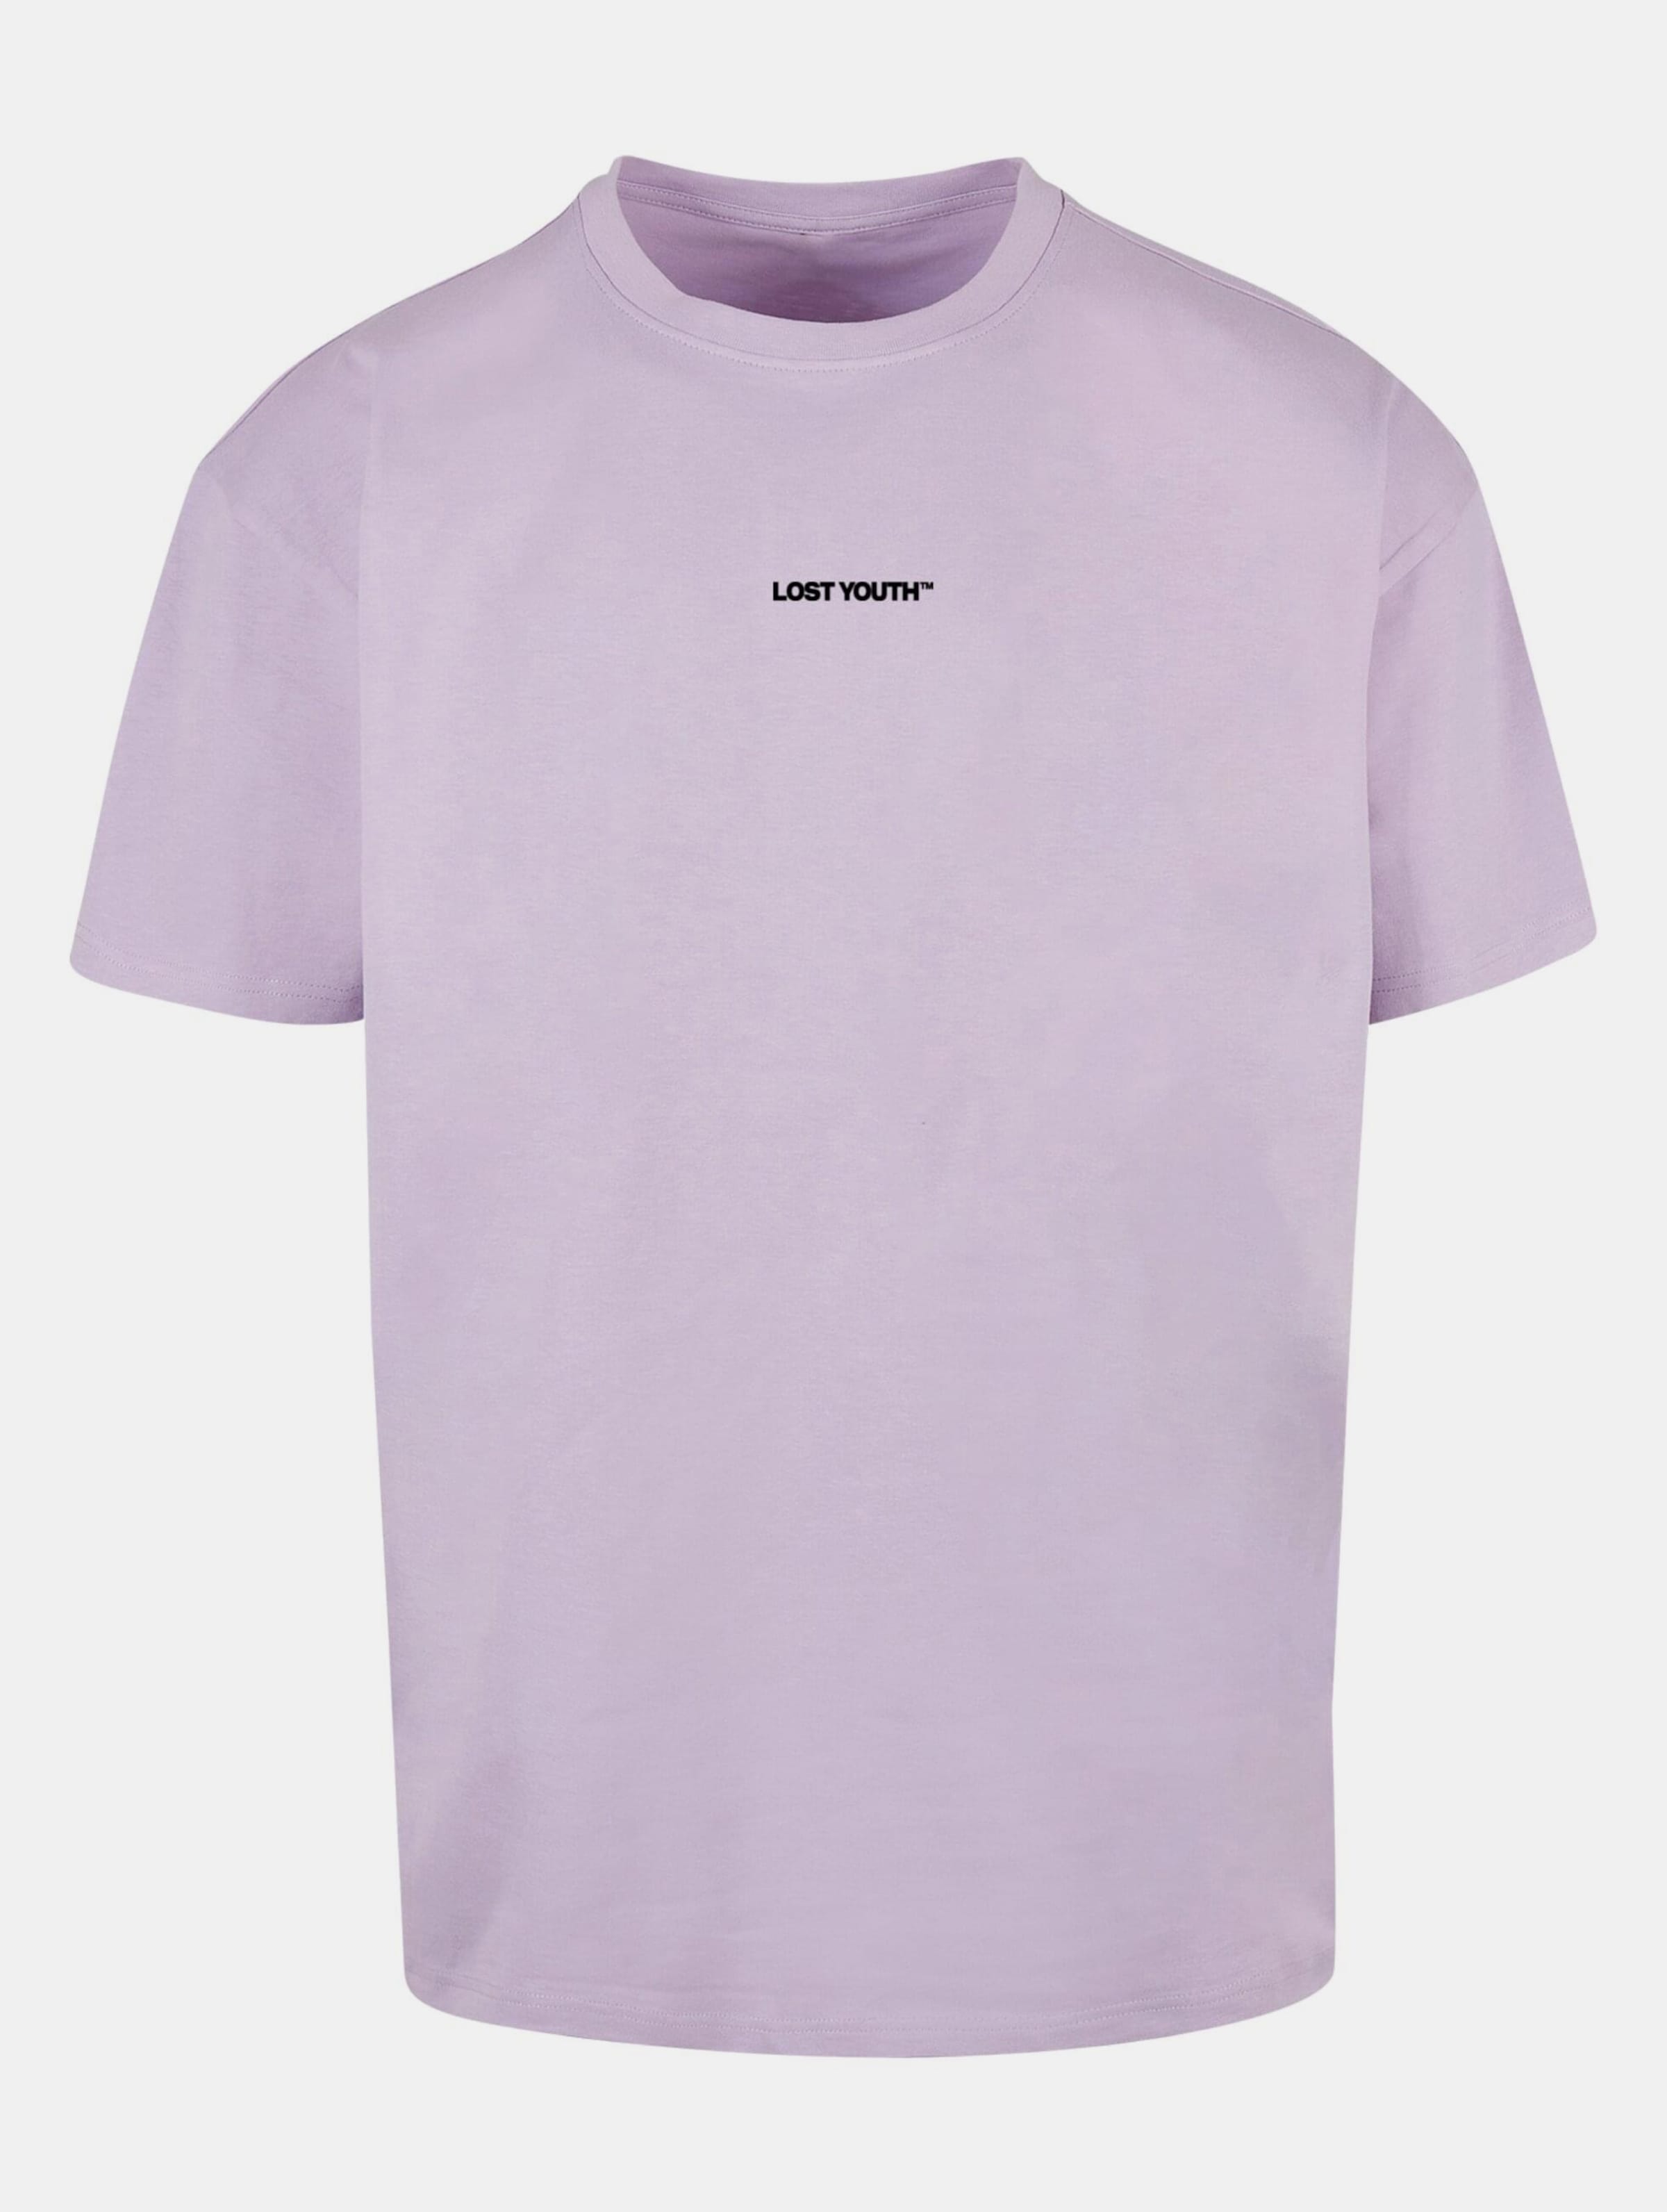 Lost Youth Chaos T-Shirts Männer,Unisex op kleur violet, Maat S